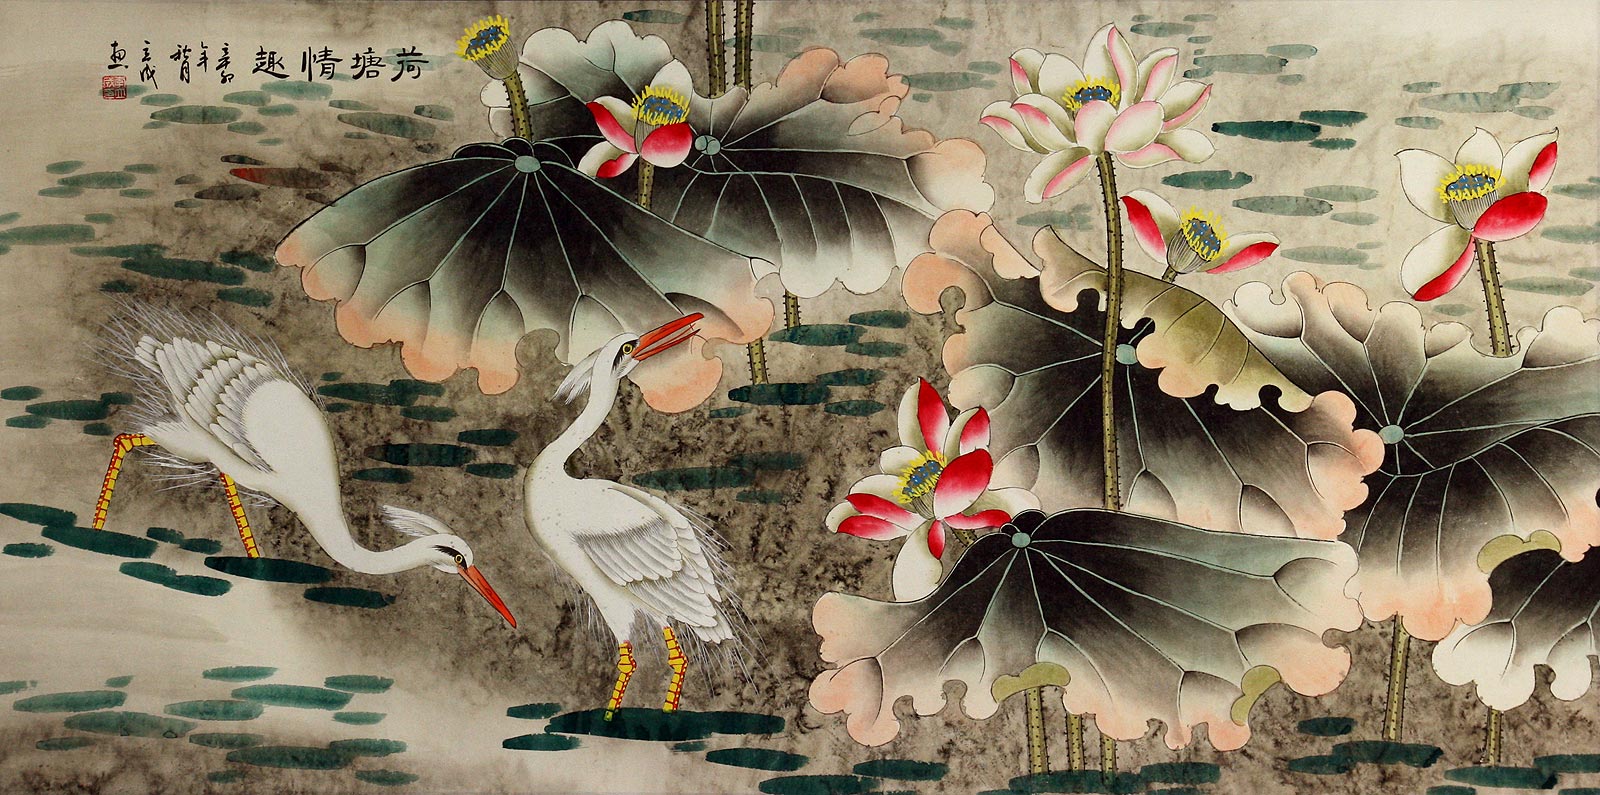 Elegant Egrets in the Lotus Pond - Large Painting